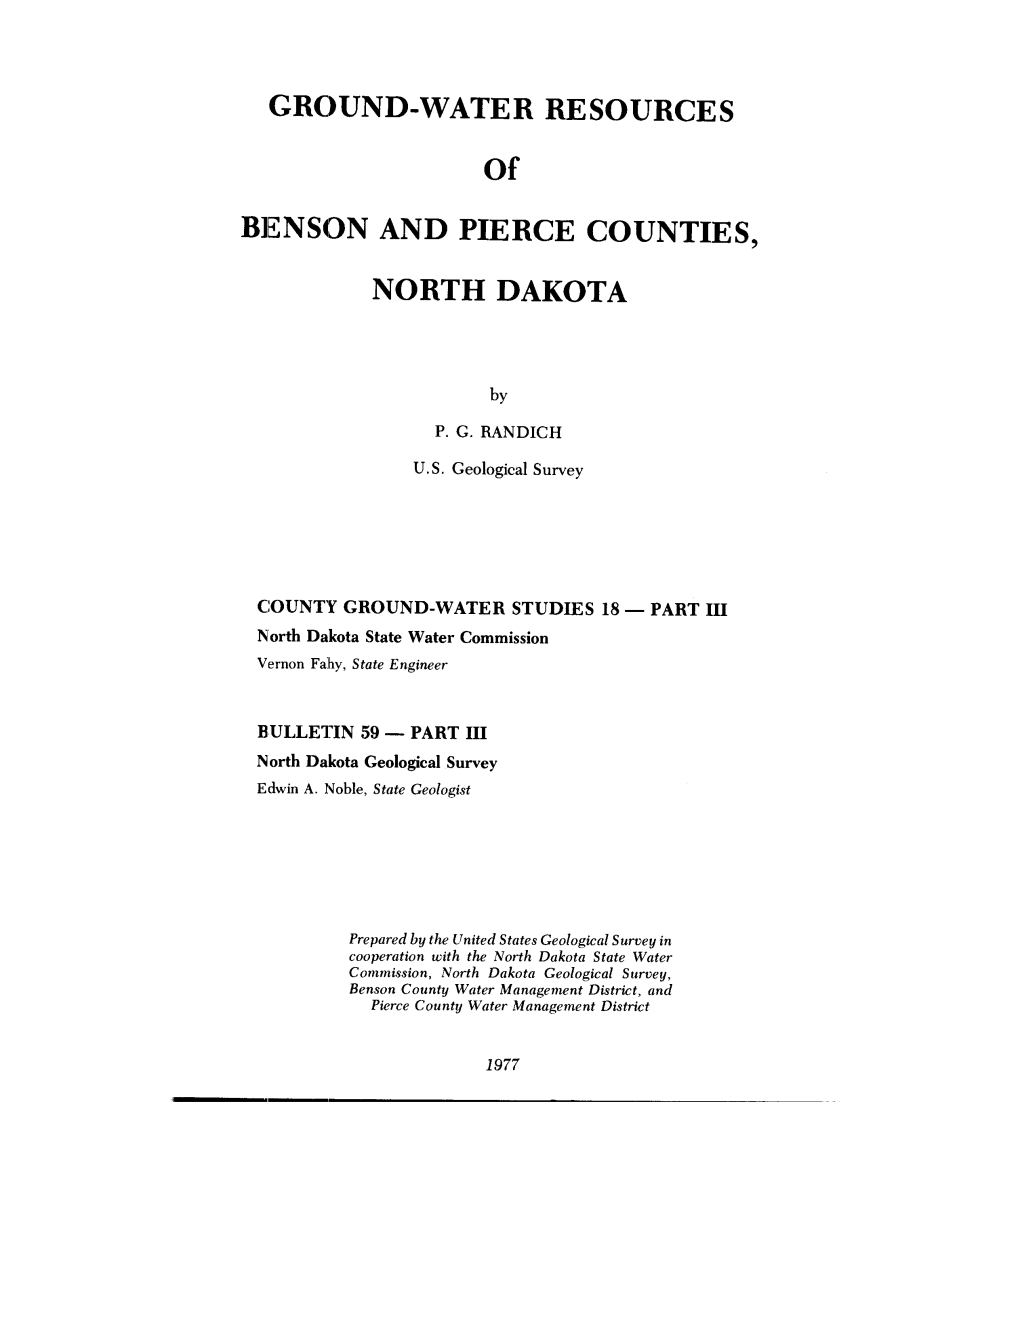 GROUND-WATER RESOURCE S of BENSON and PIERCE COUNTIES